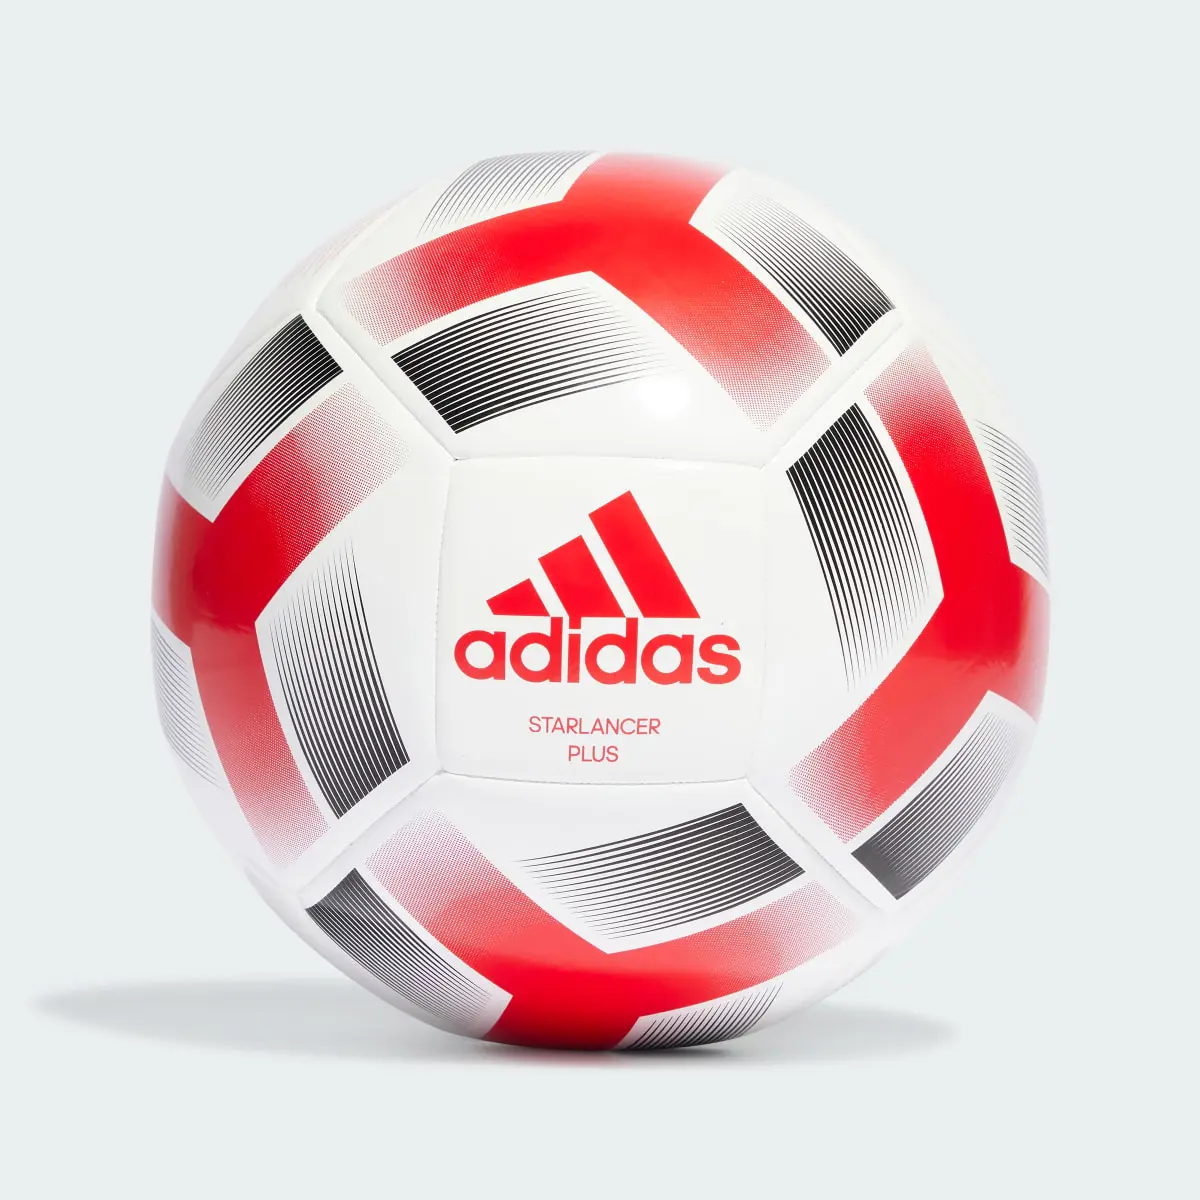 Adidas Starlancer Plus Football. 2